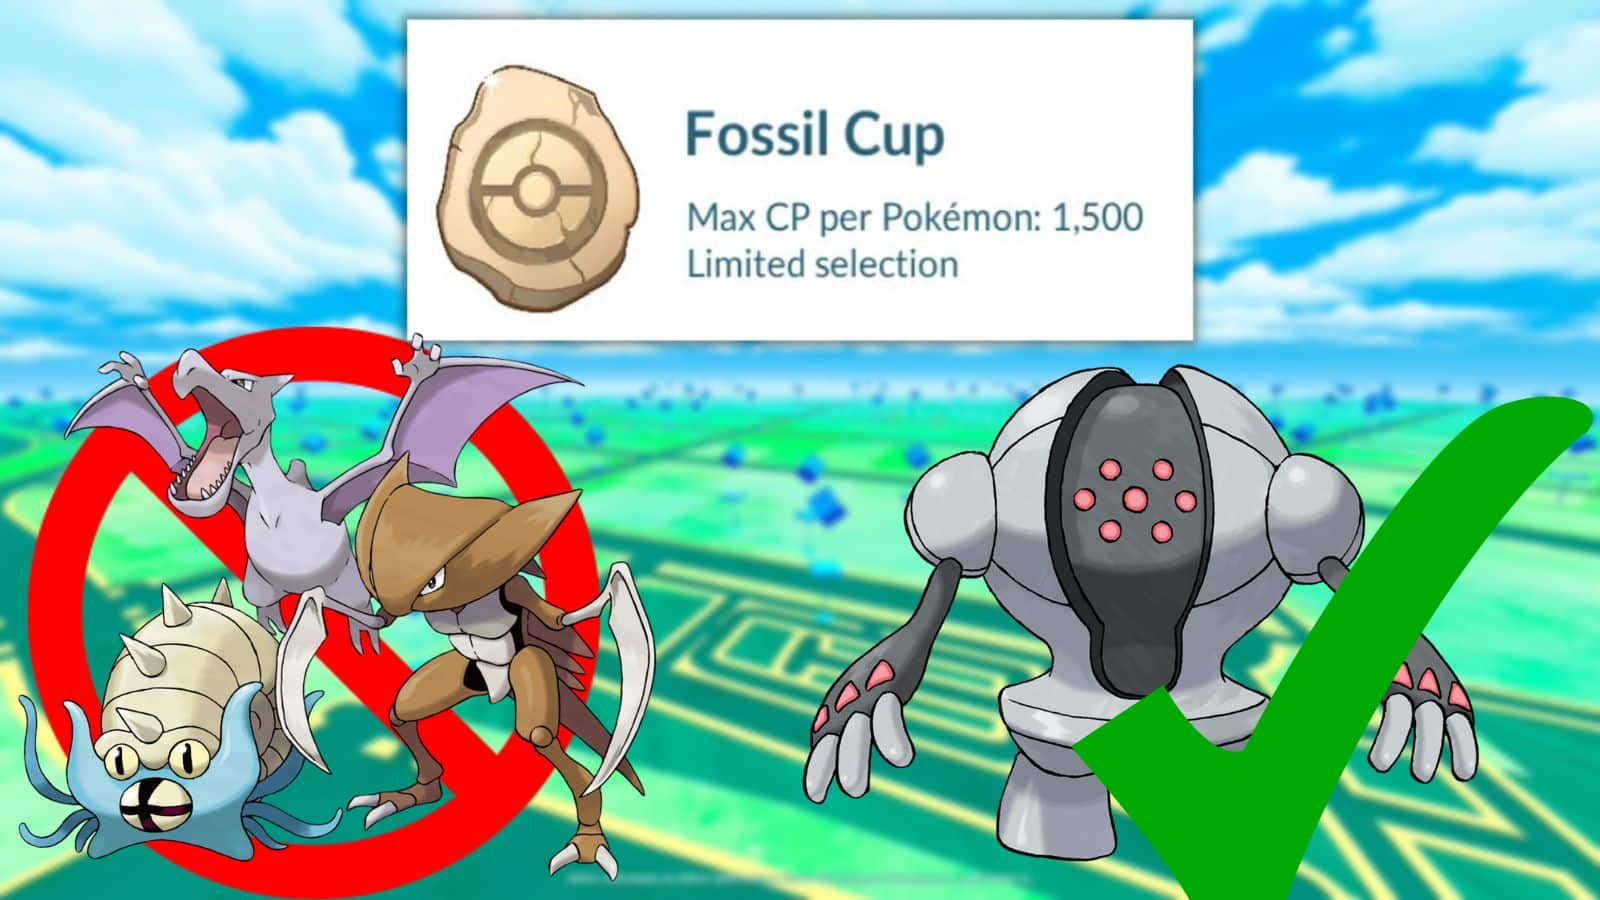 Pokemon go fossil cup registeel header image